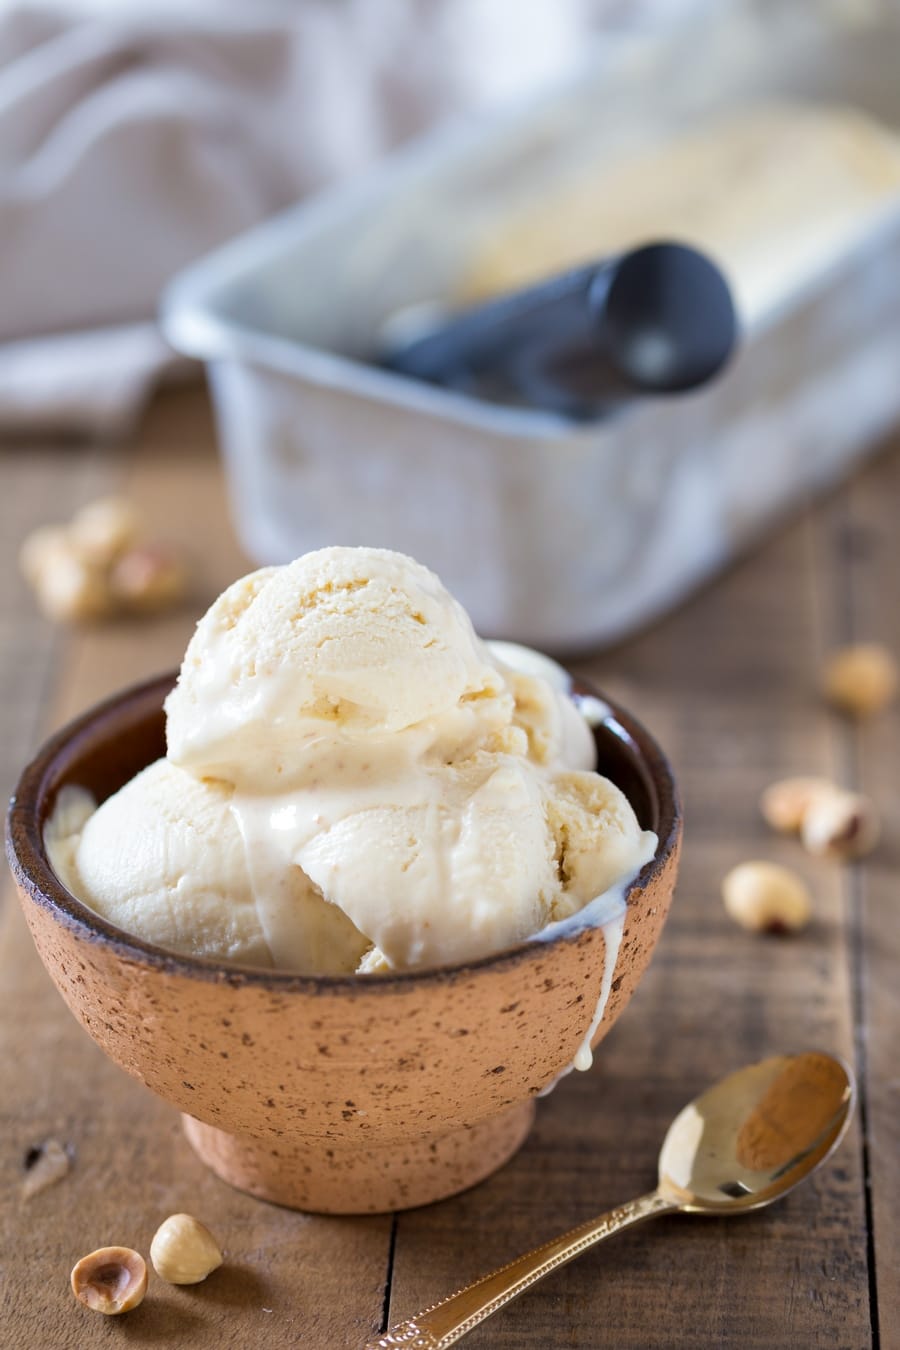 No-churn hazelnut ice cream served in a brown bowl.